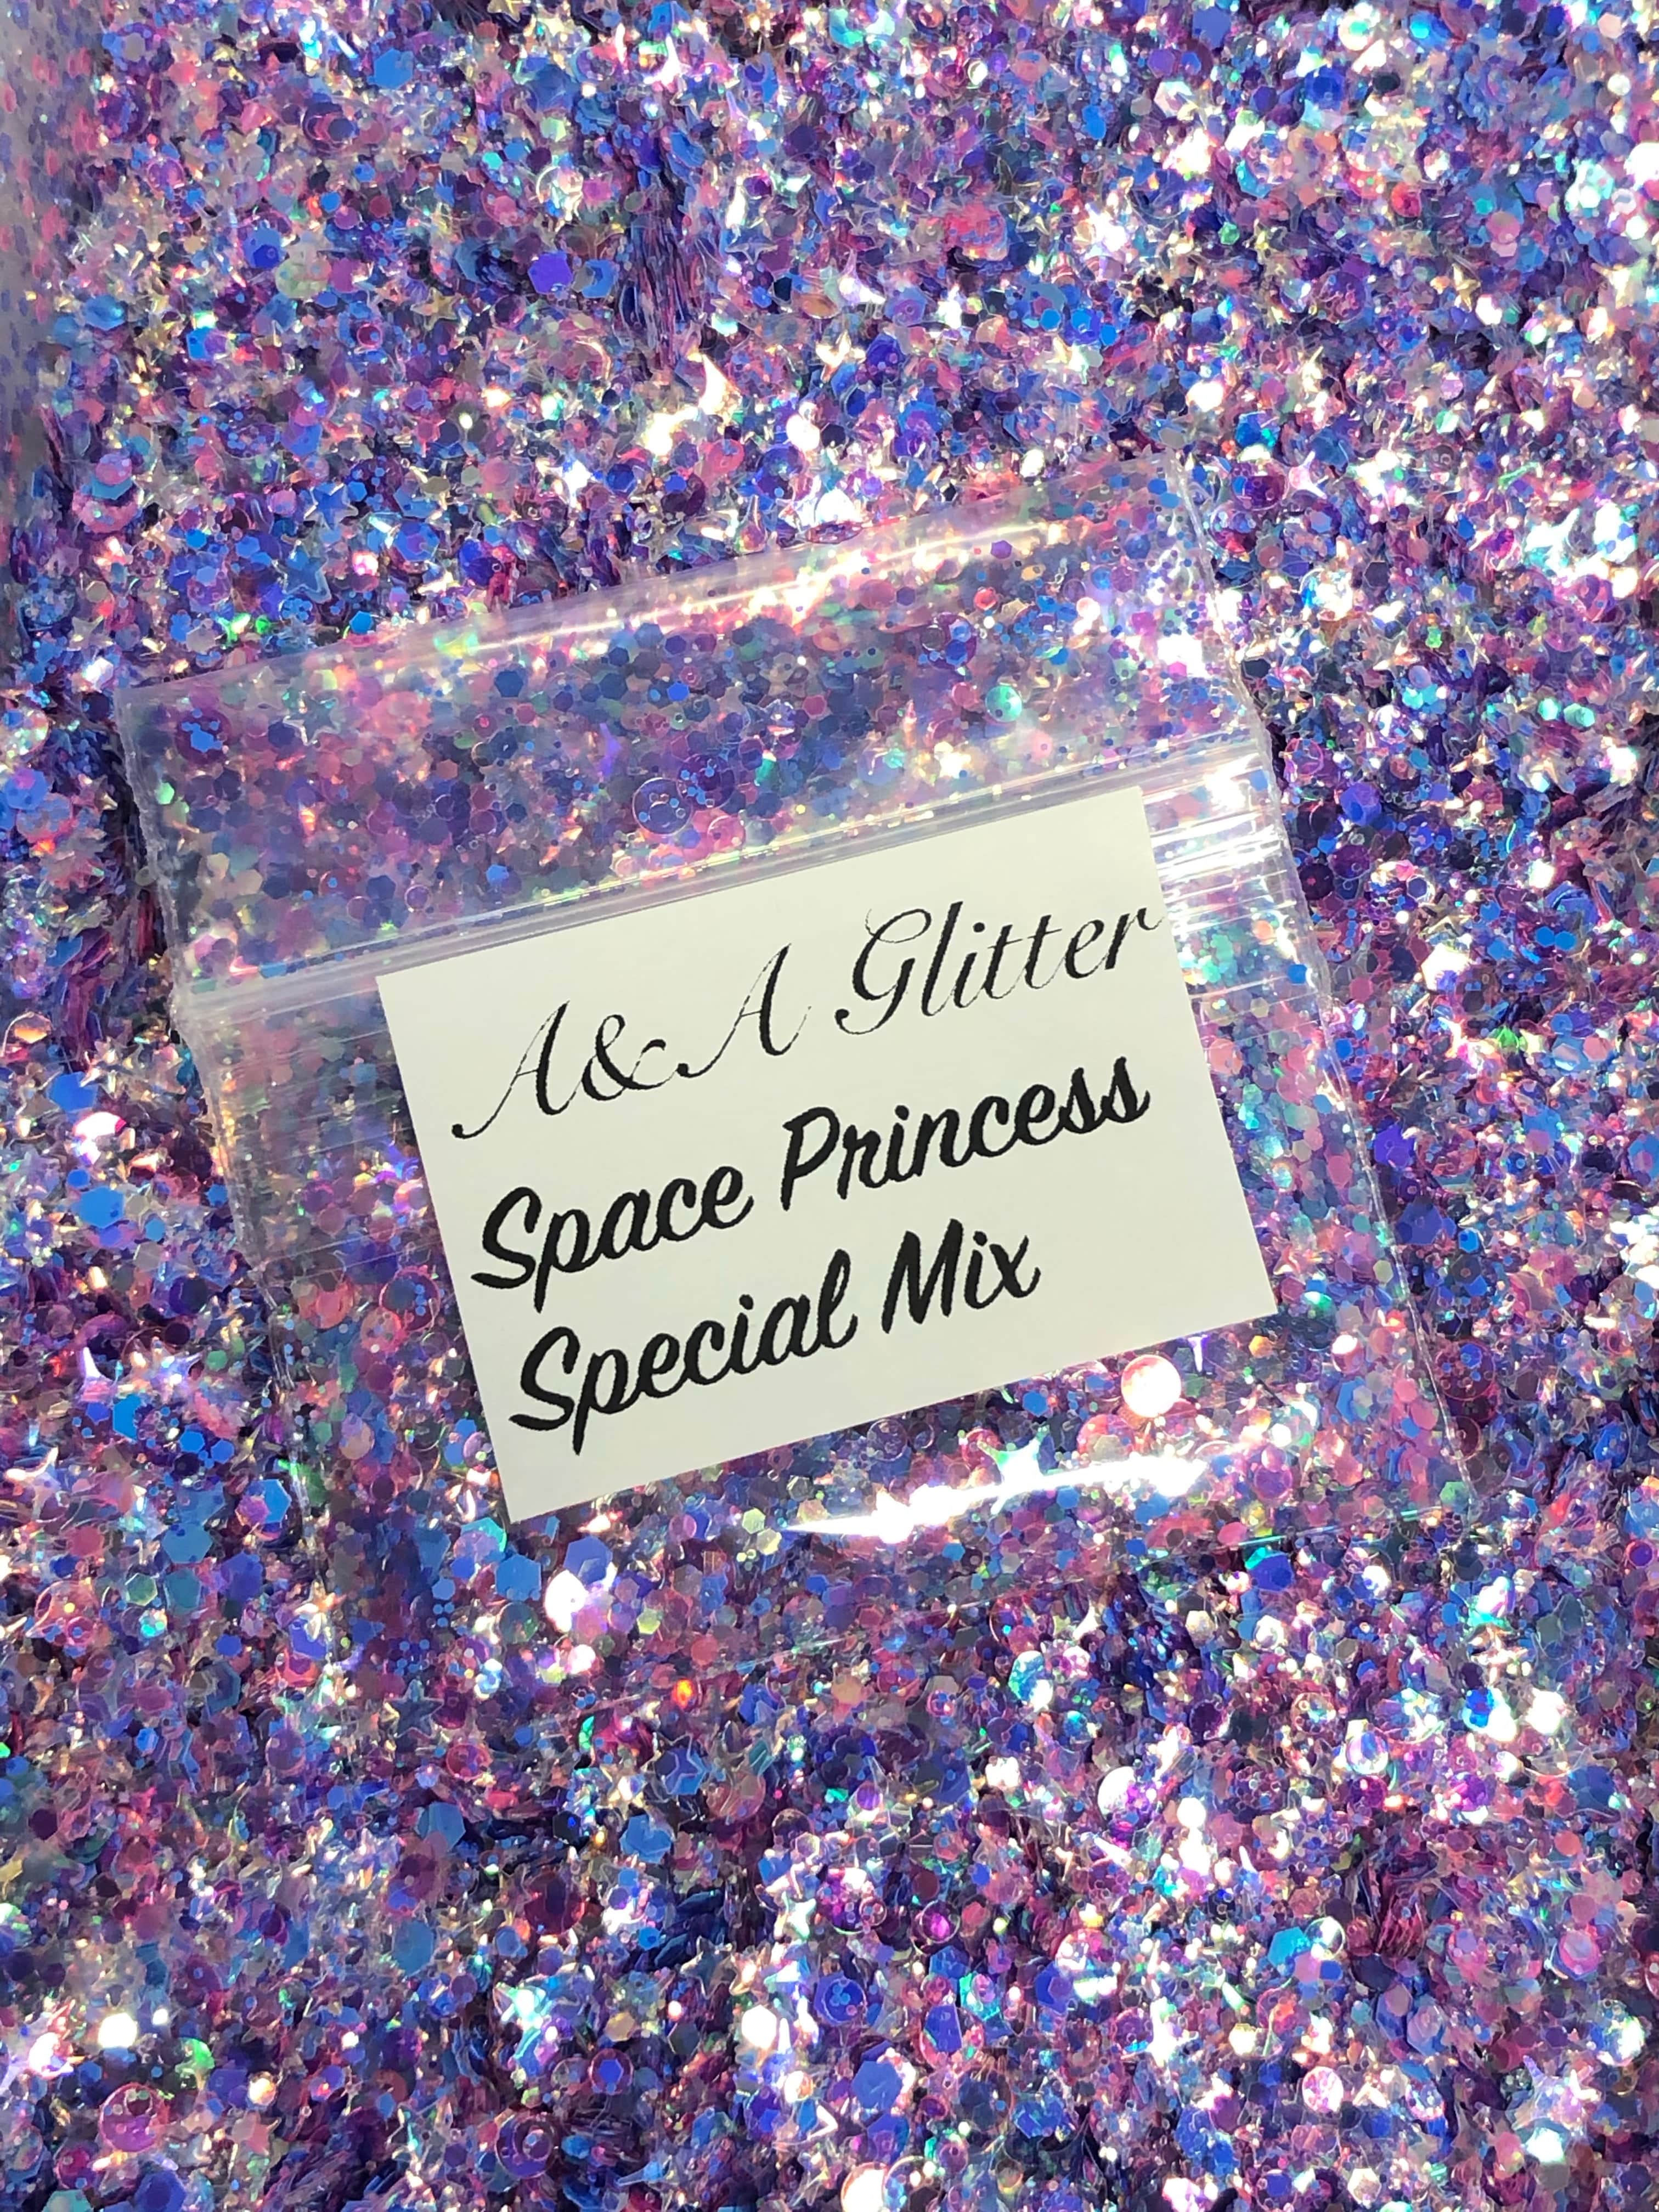 Space Princess - Special Mix